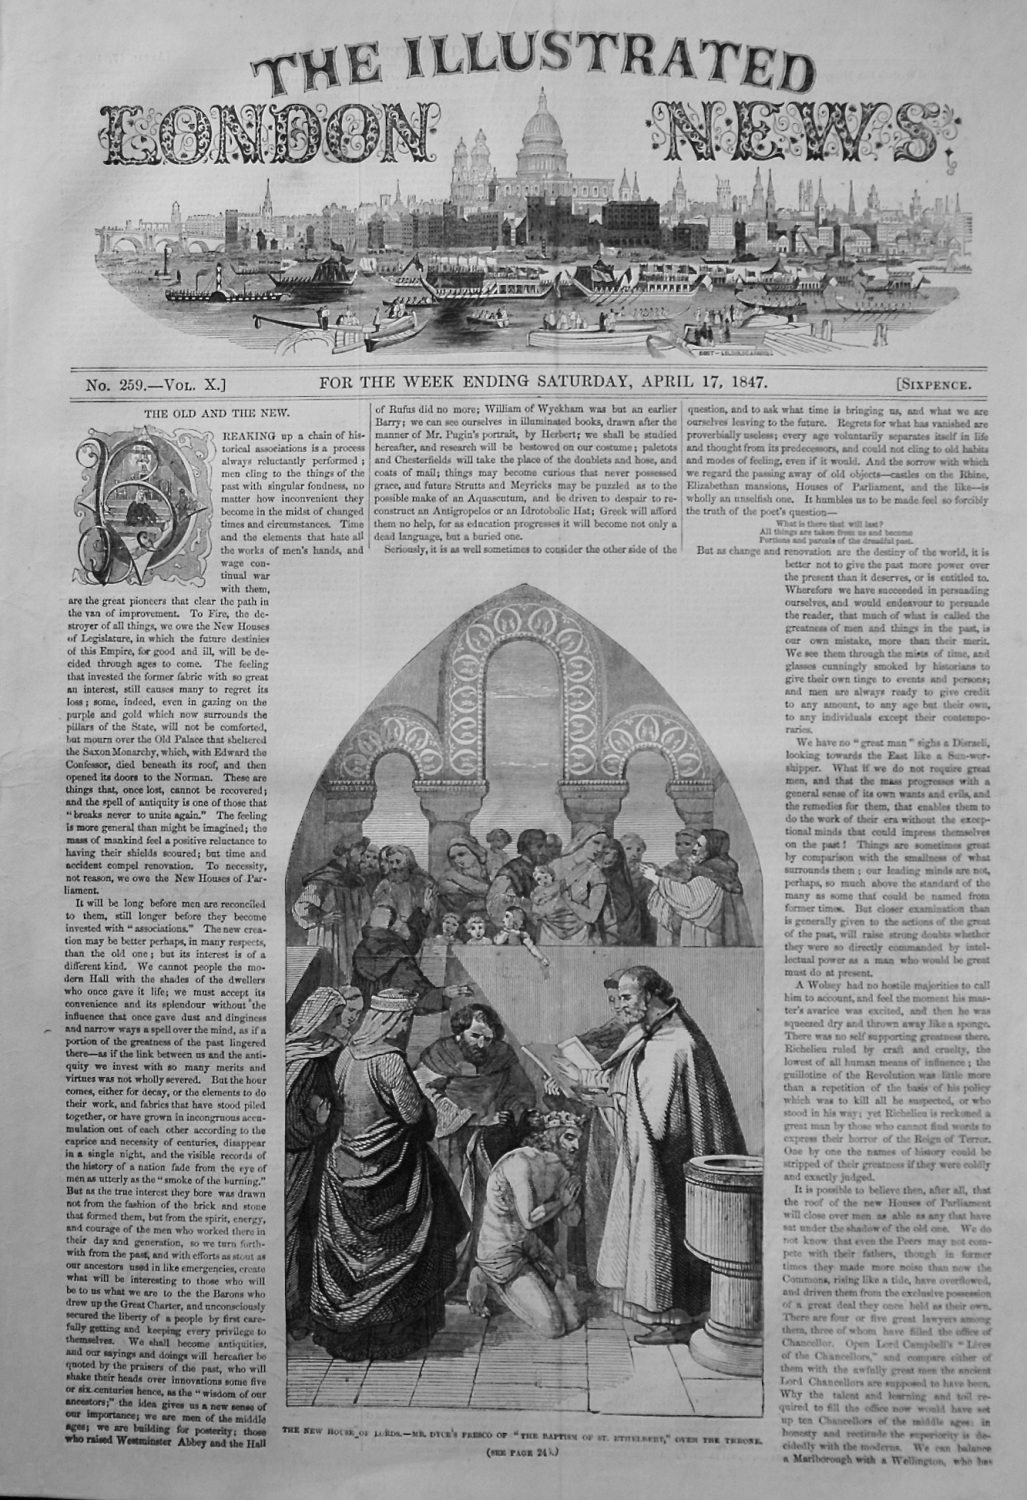 Illustrated London News. April 17th, 1847.